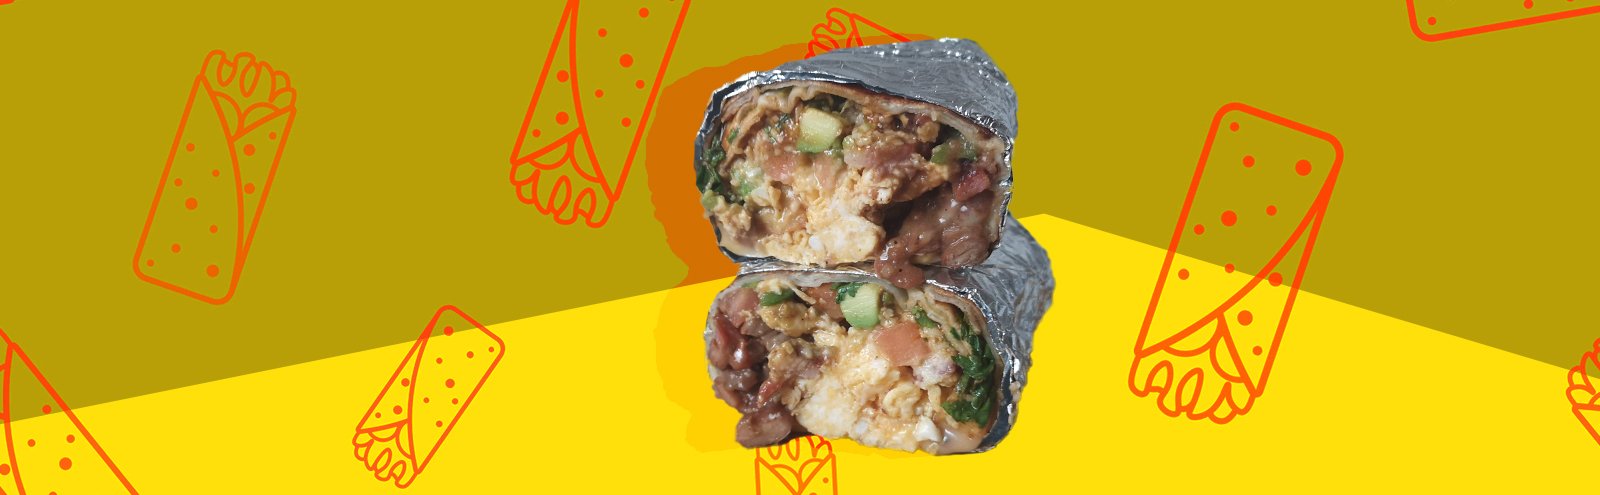 We Designed A Massive Breakfast Burrito To Wreck Your Next Hangover